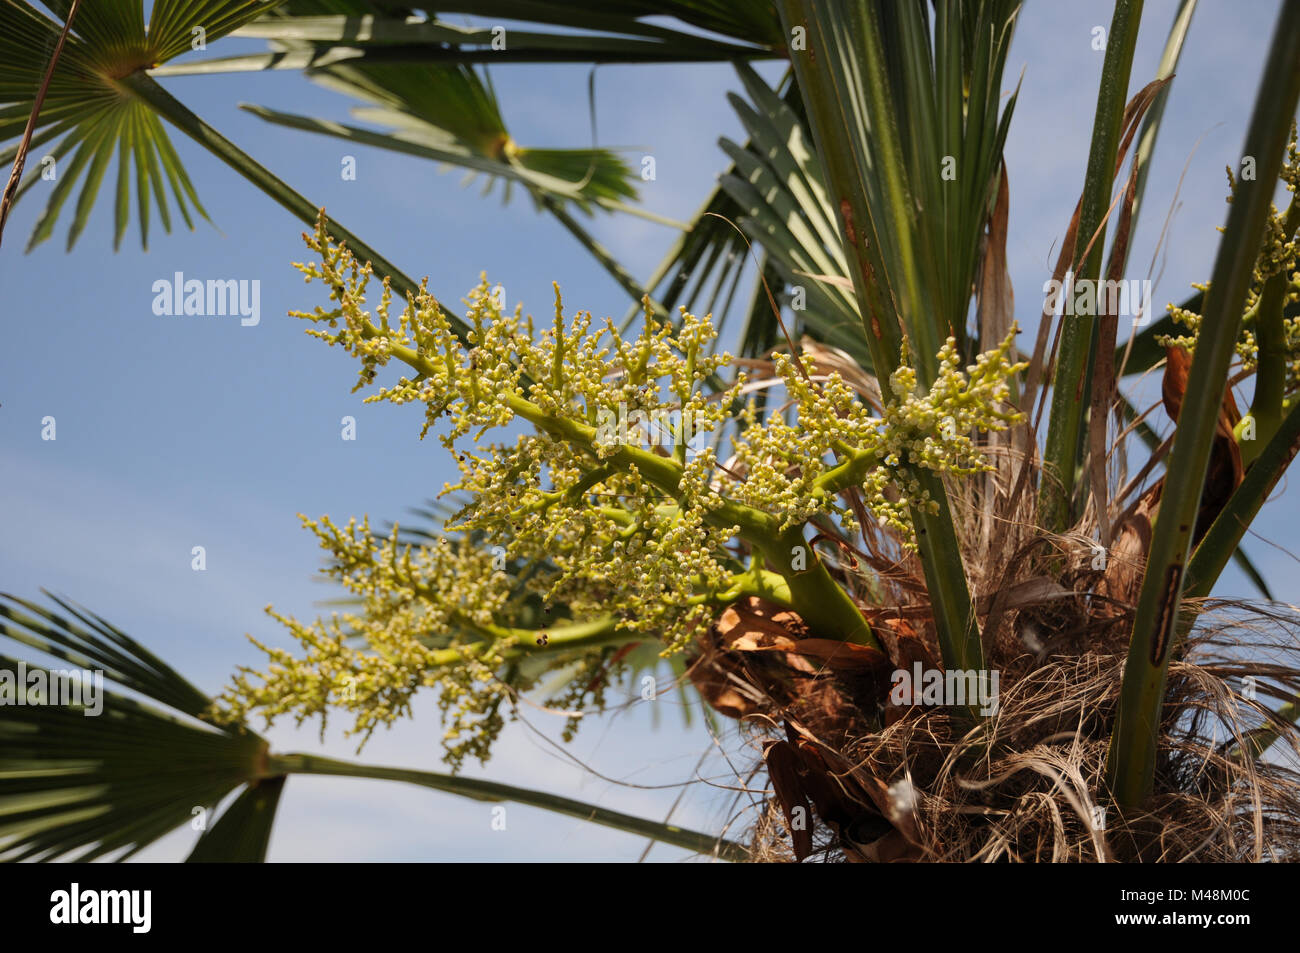 Trachycarpus fortunei, Chinese windmill palm, flowers Stock Photo